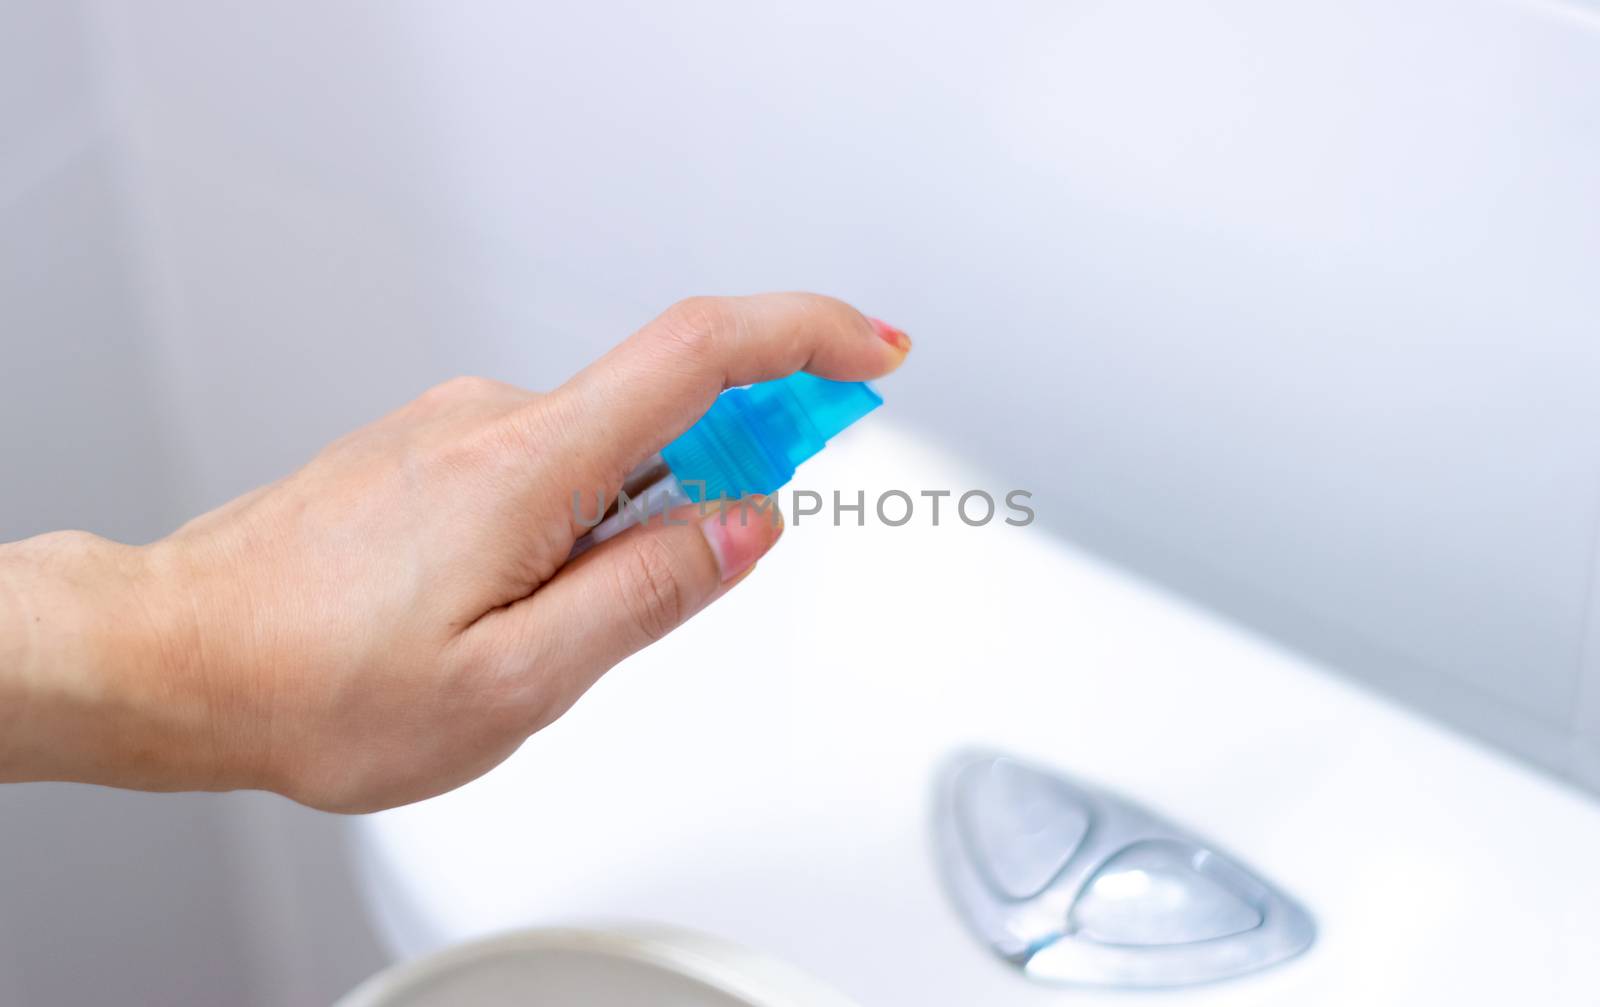 Alcohol spray press flush toilet clean protection against Coronavirus 2019 (Covid-19) by sompongtom